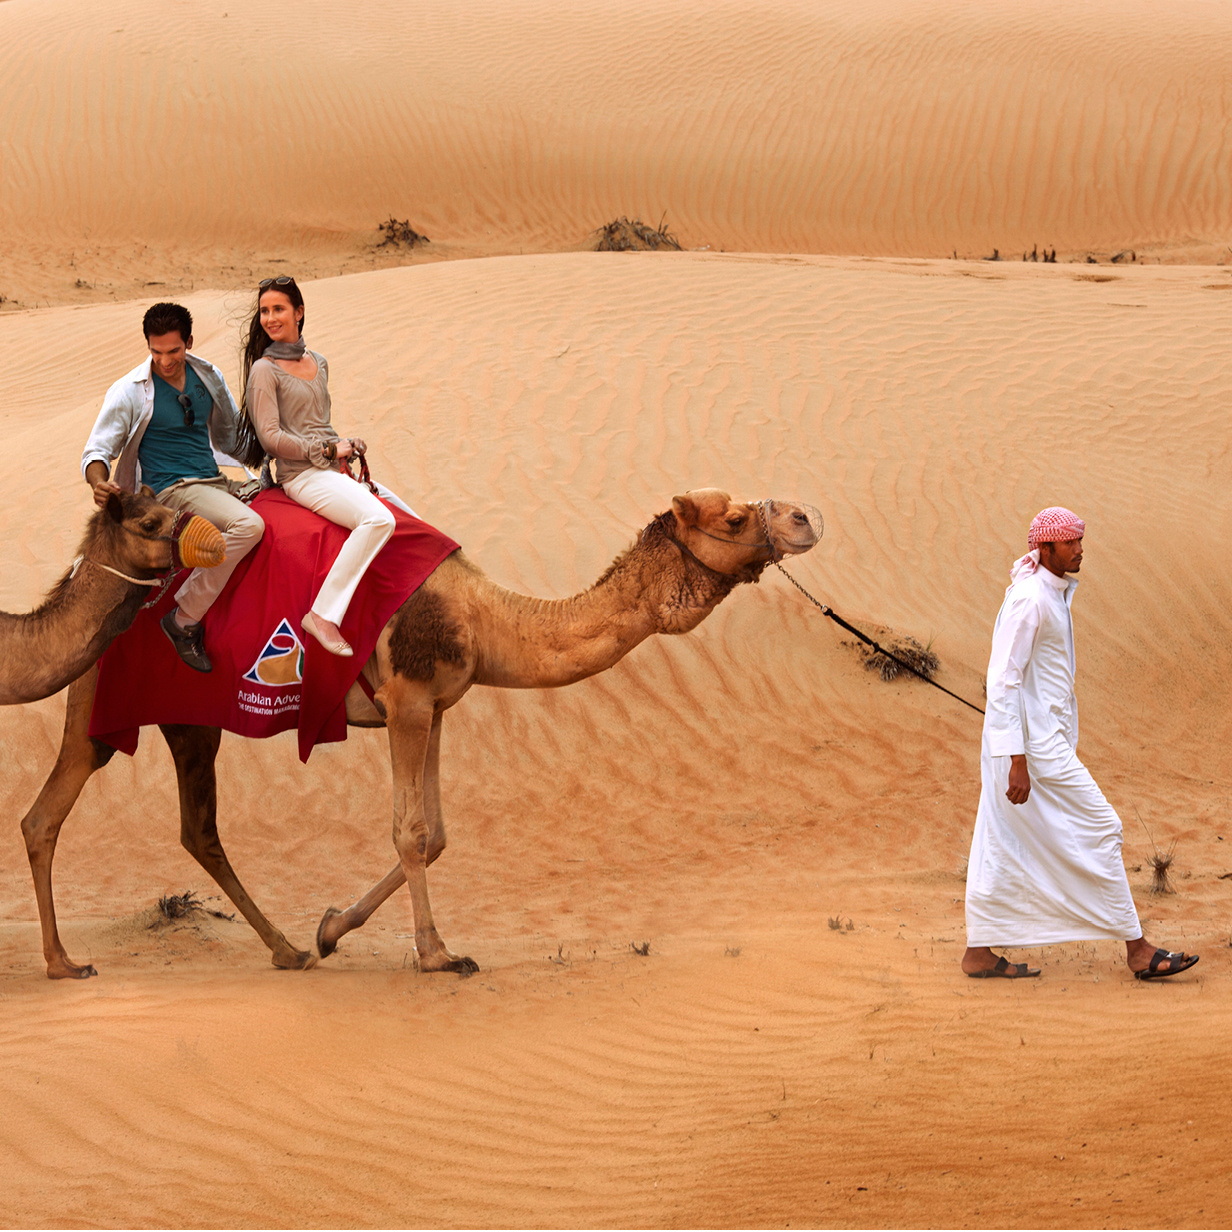 Morning Desert Adventure in Dubai - Private Vehicle, , large